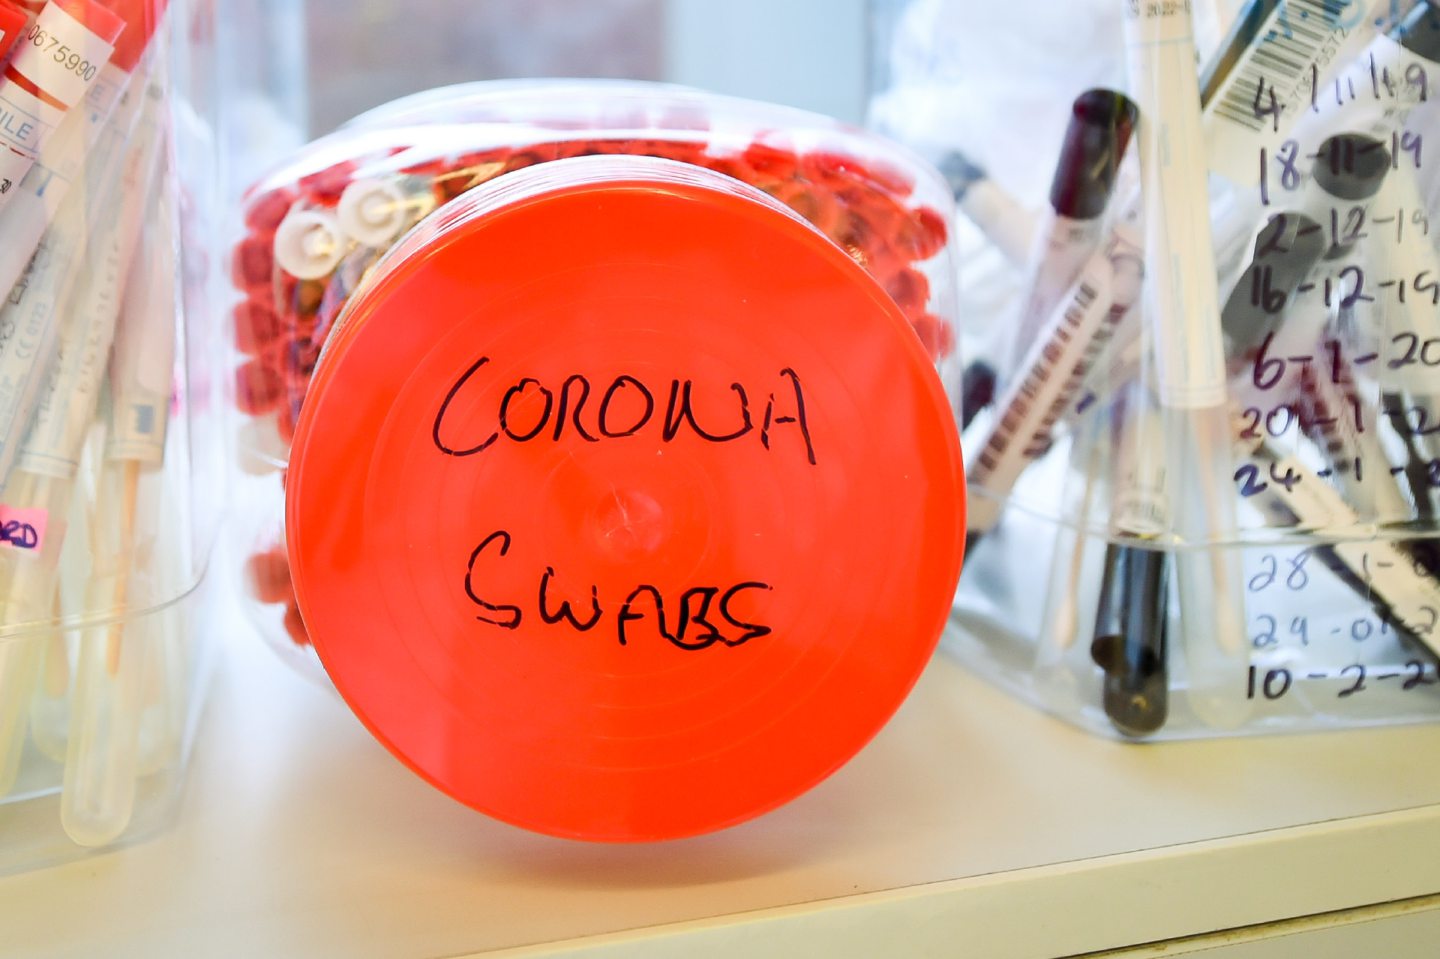 Coronavirus COVID-19 swabs